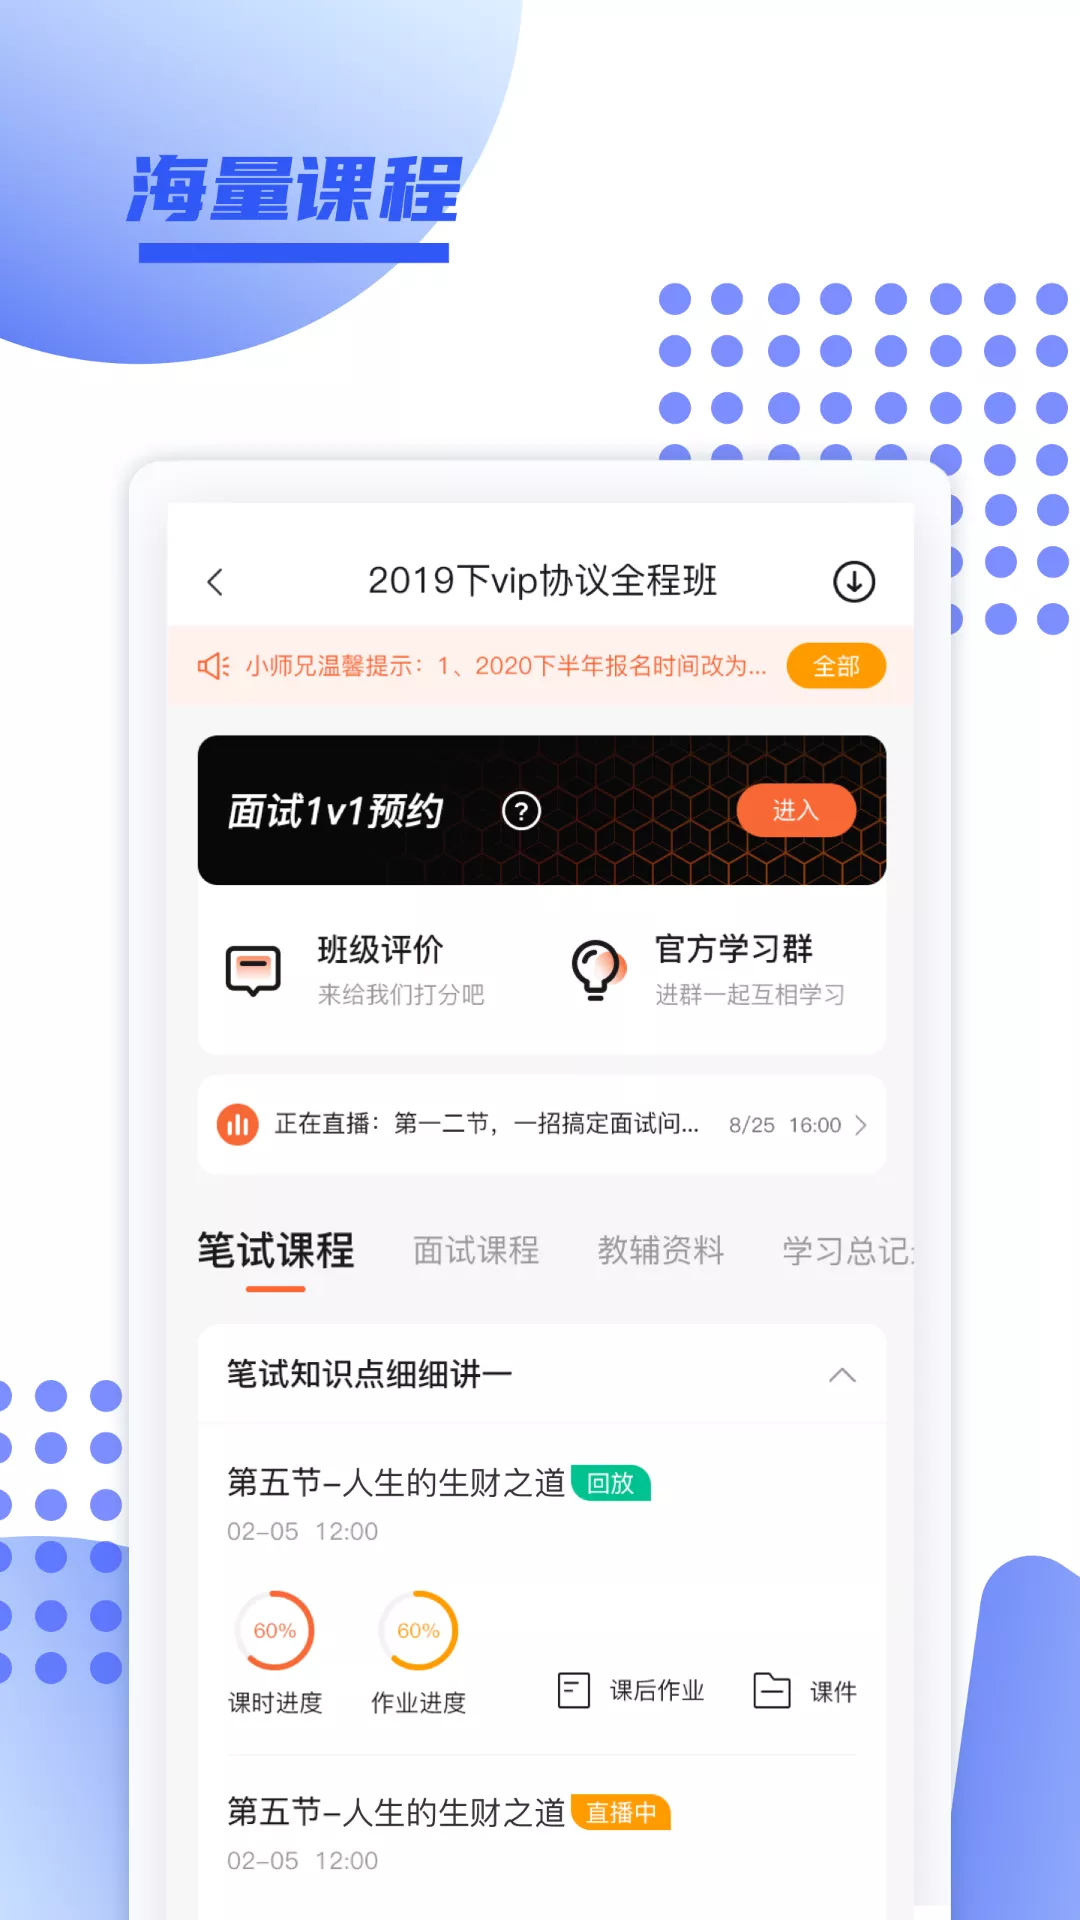 育财师通app1.0.19